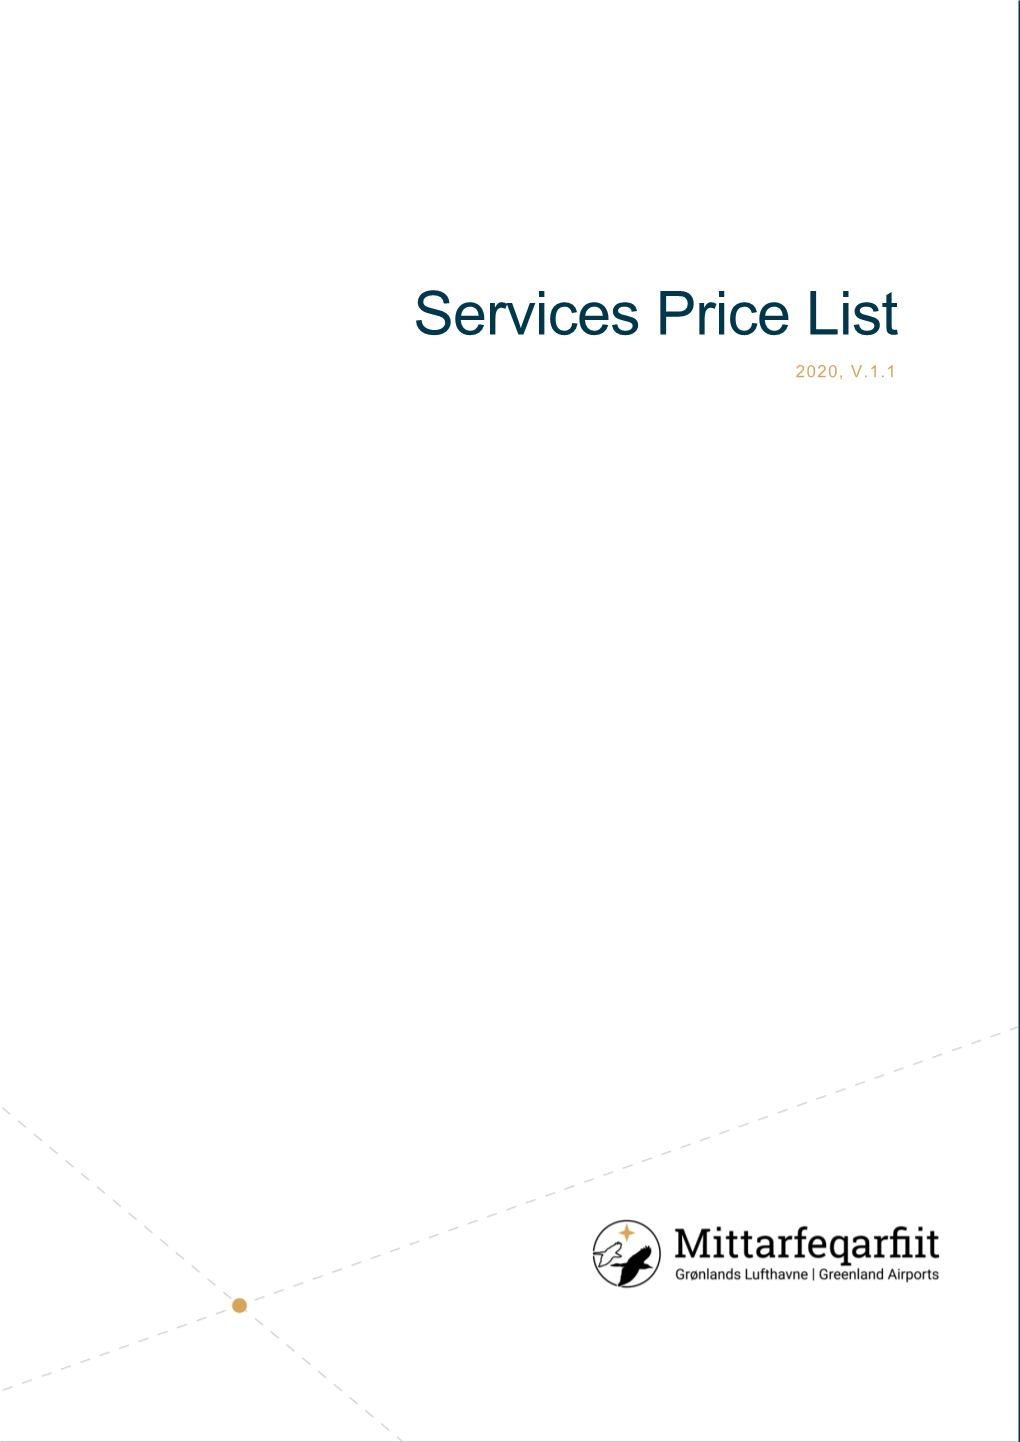 Services Price List 2020, V.1.1